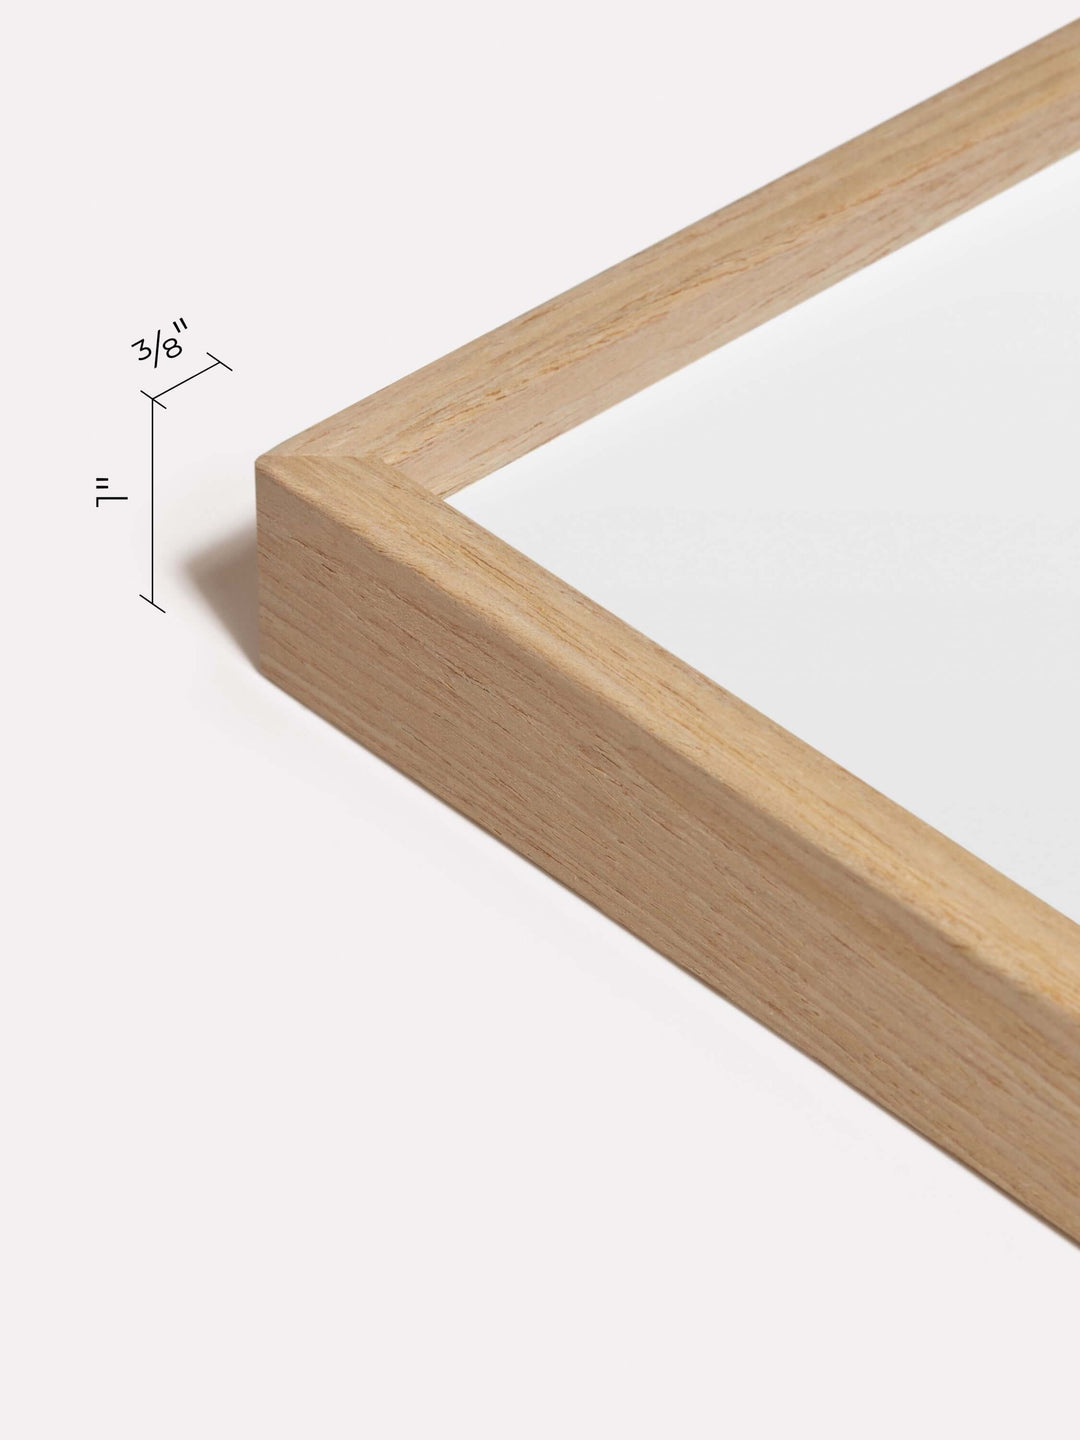 12x16-inch Thin Frame, Oak - Close-up view